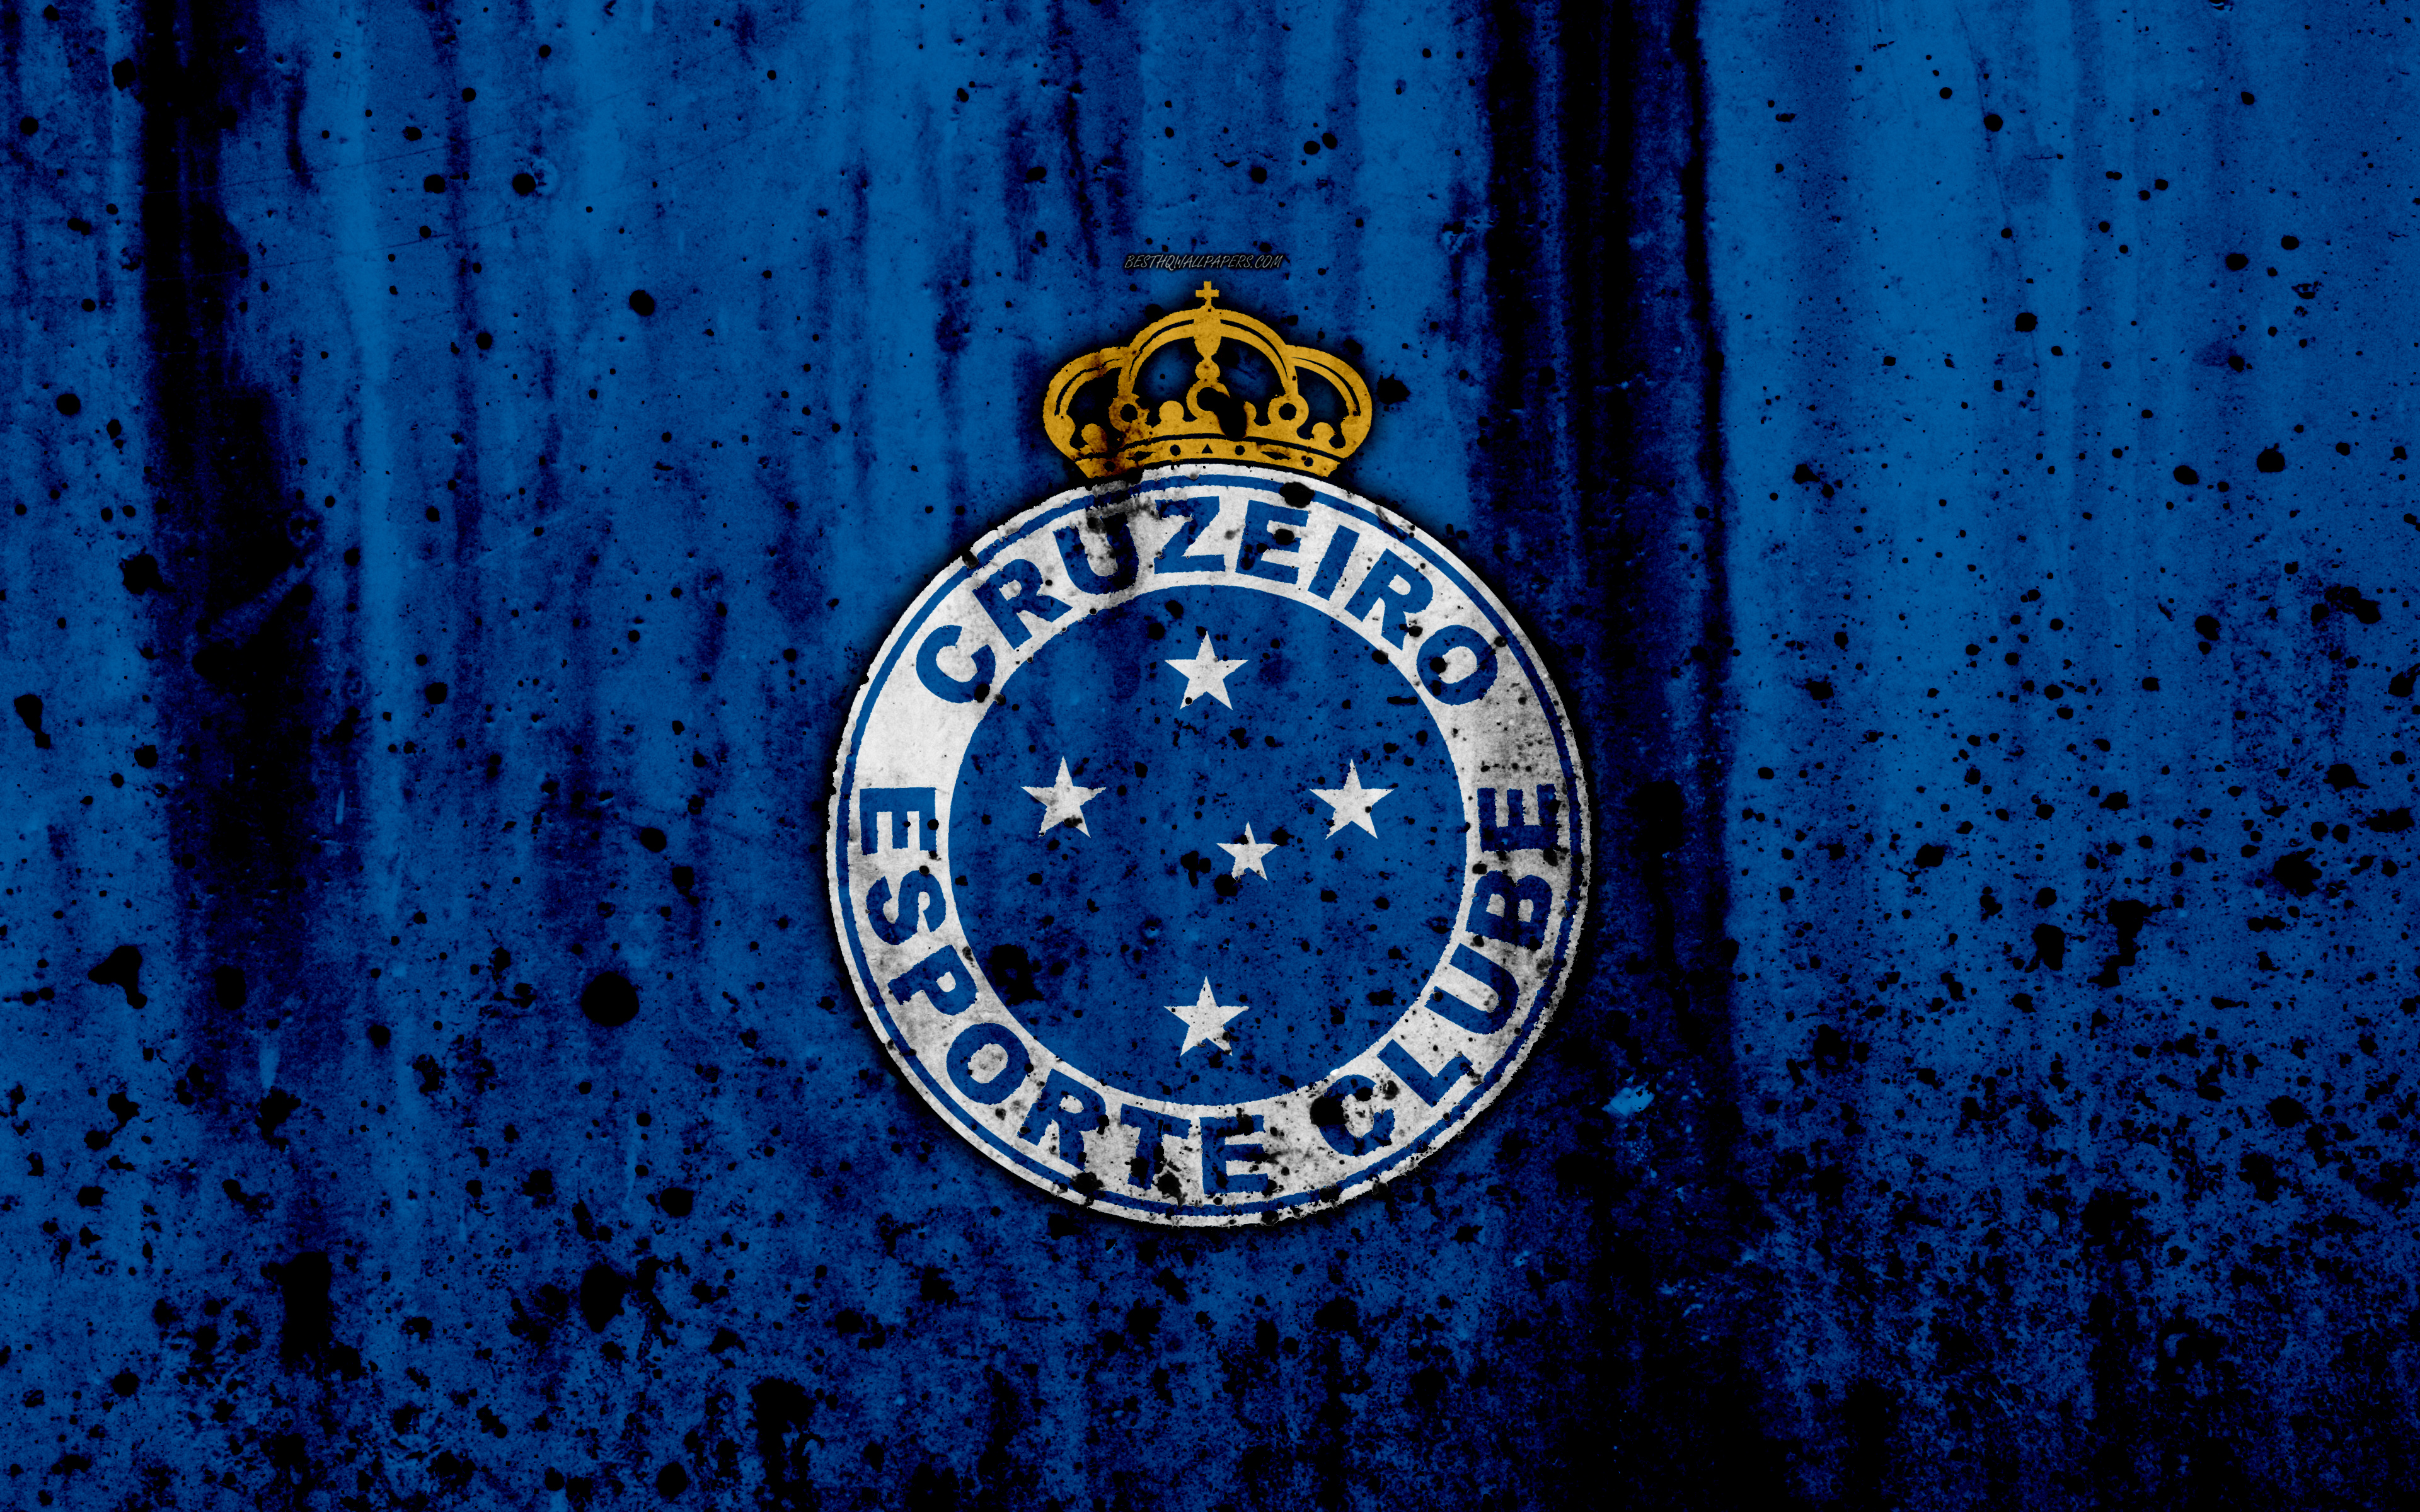 Wallpaper Fc Cruzeiro 4k Grunge Brazilian Seria A